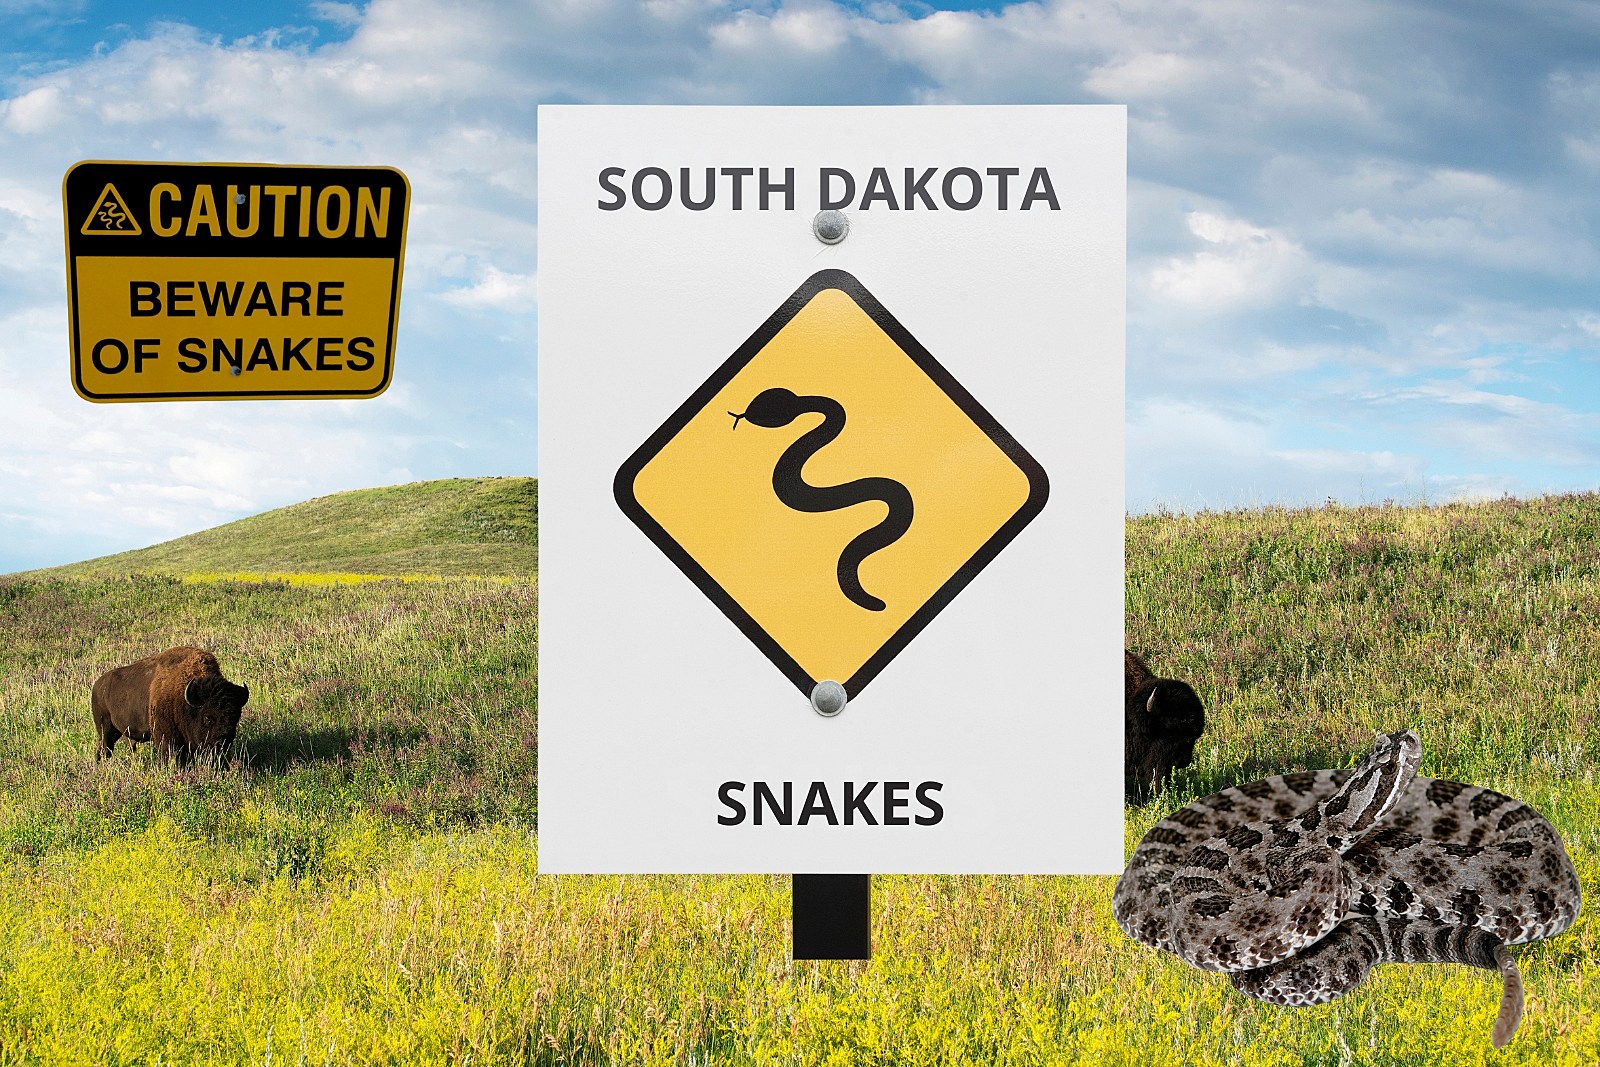 South Dakota's 7 Snakes